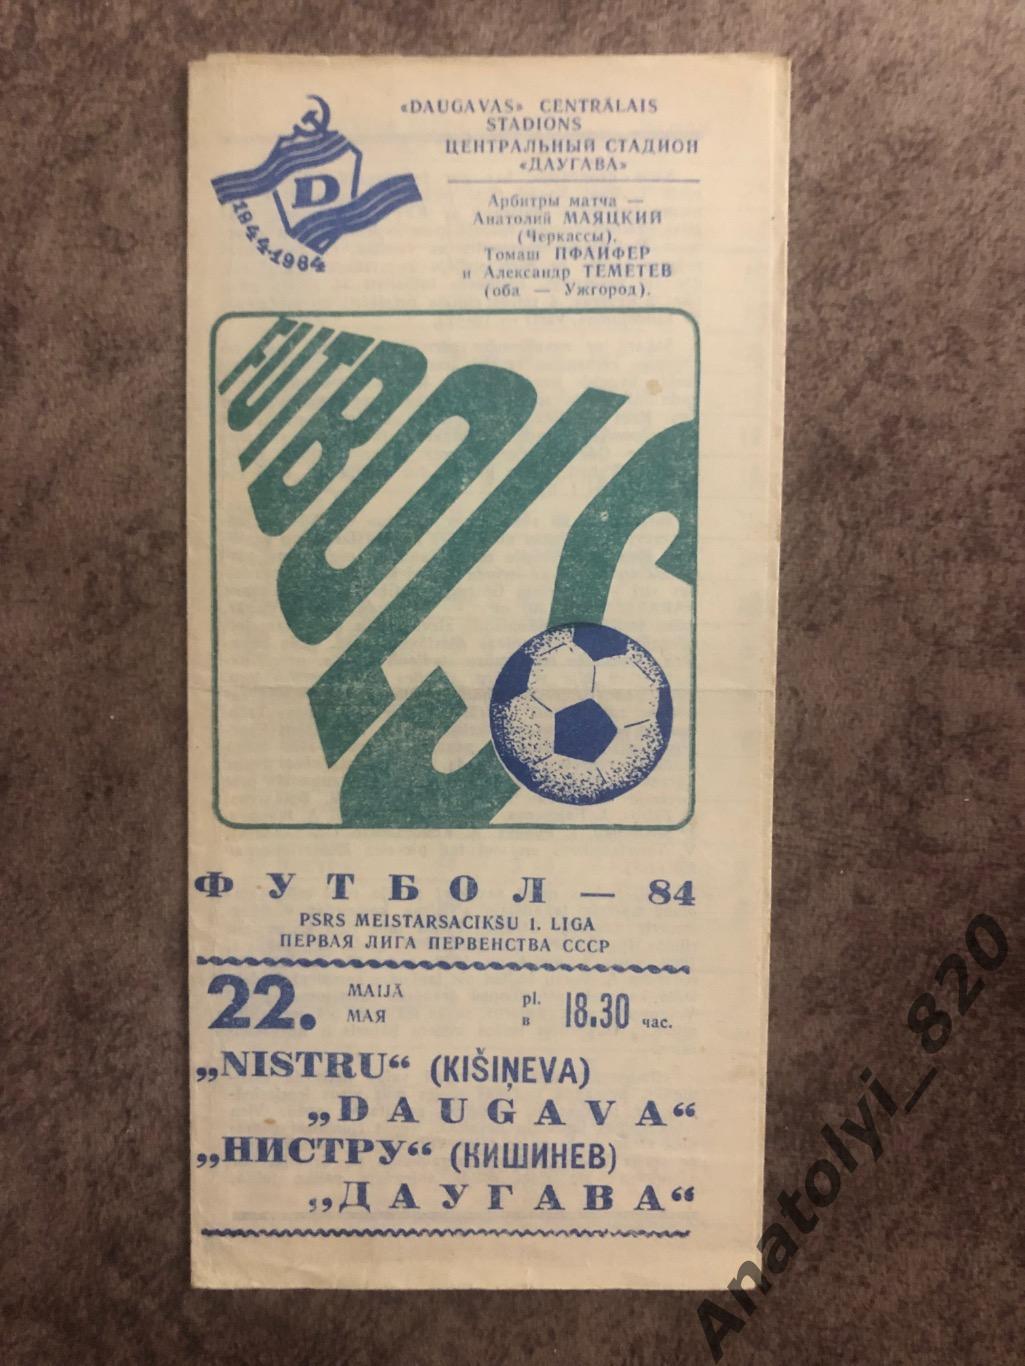 Даугава Рига - Нистру Кишинёв 1984 год